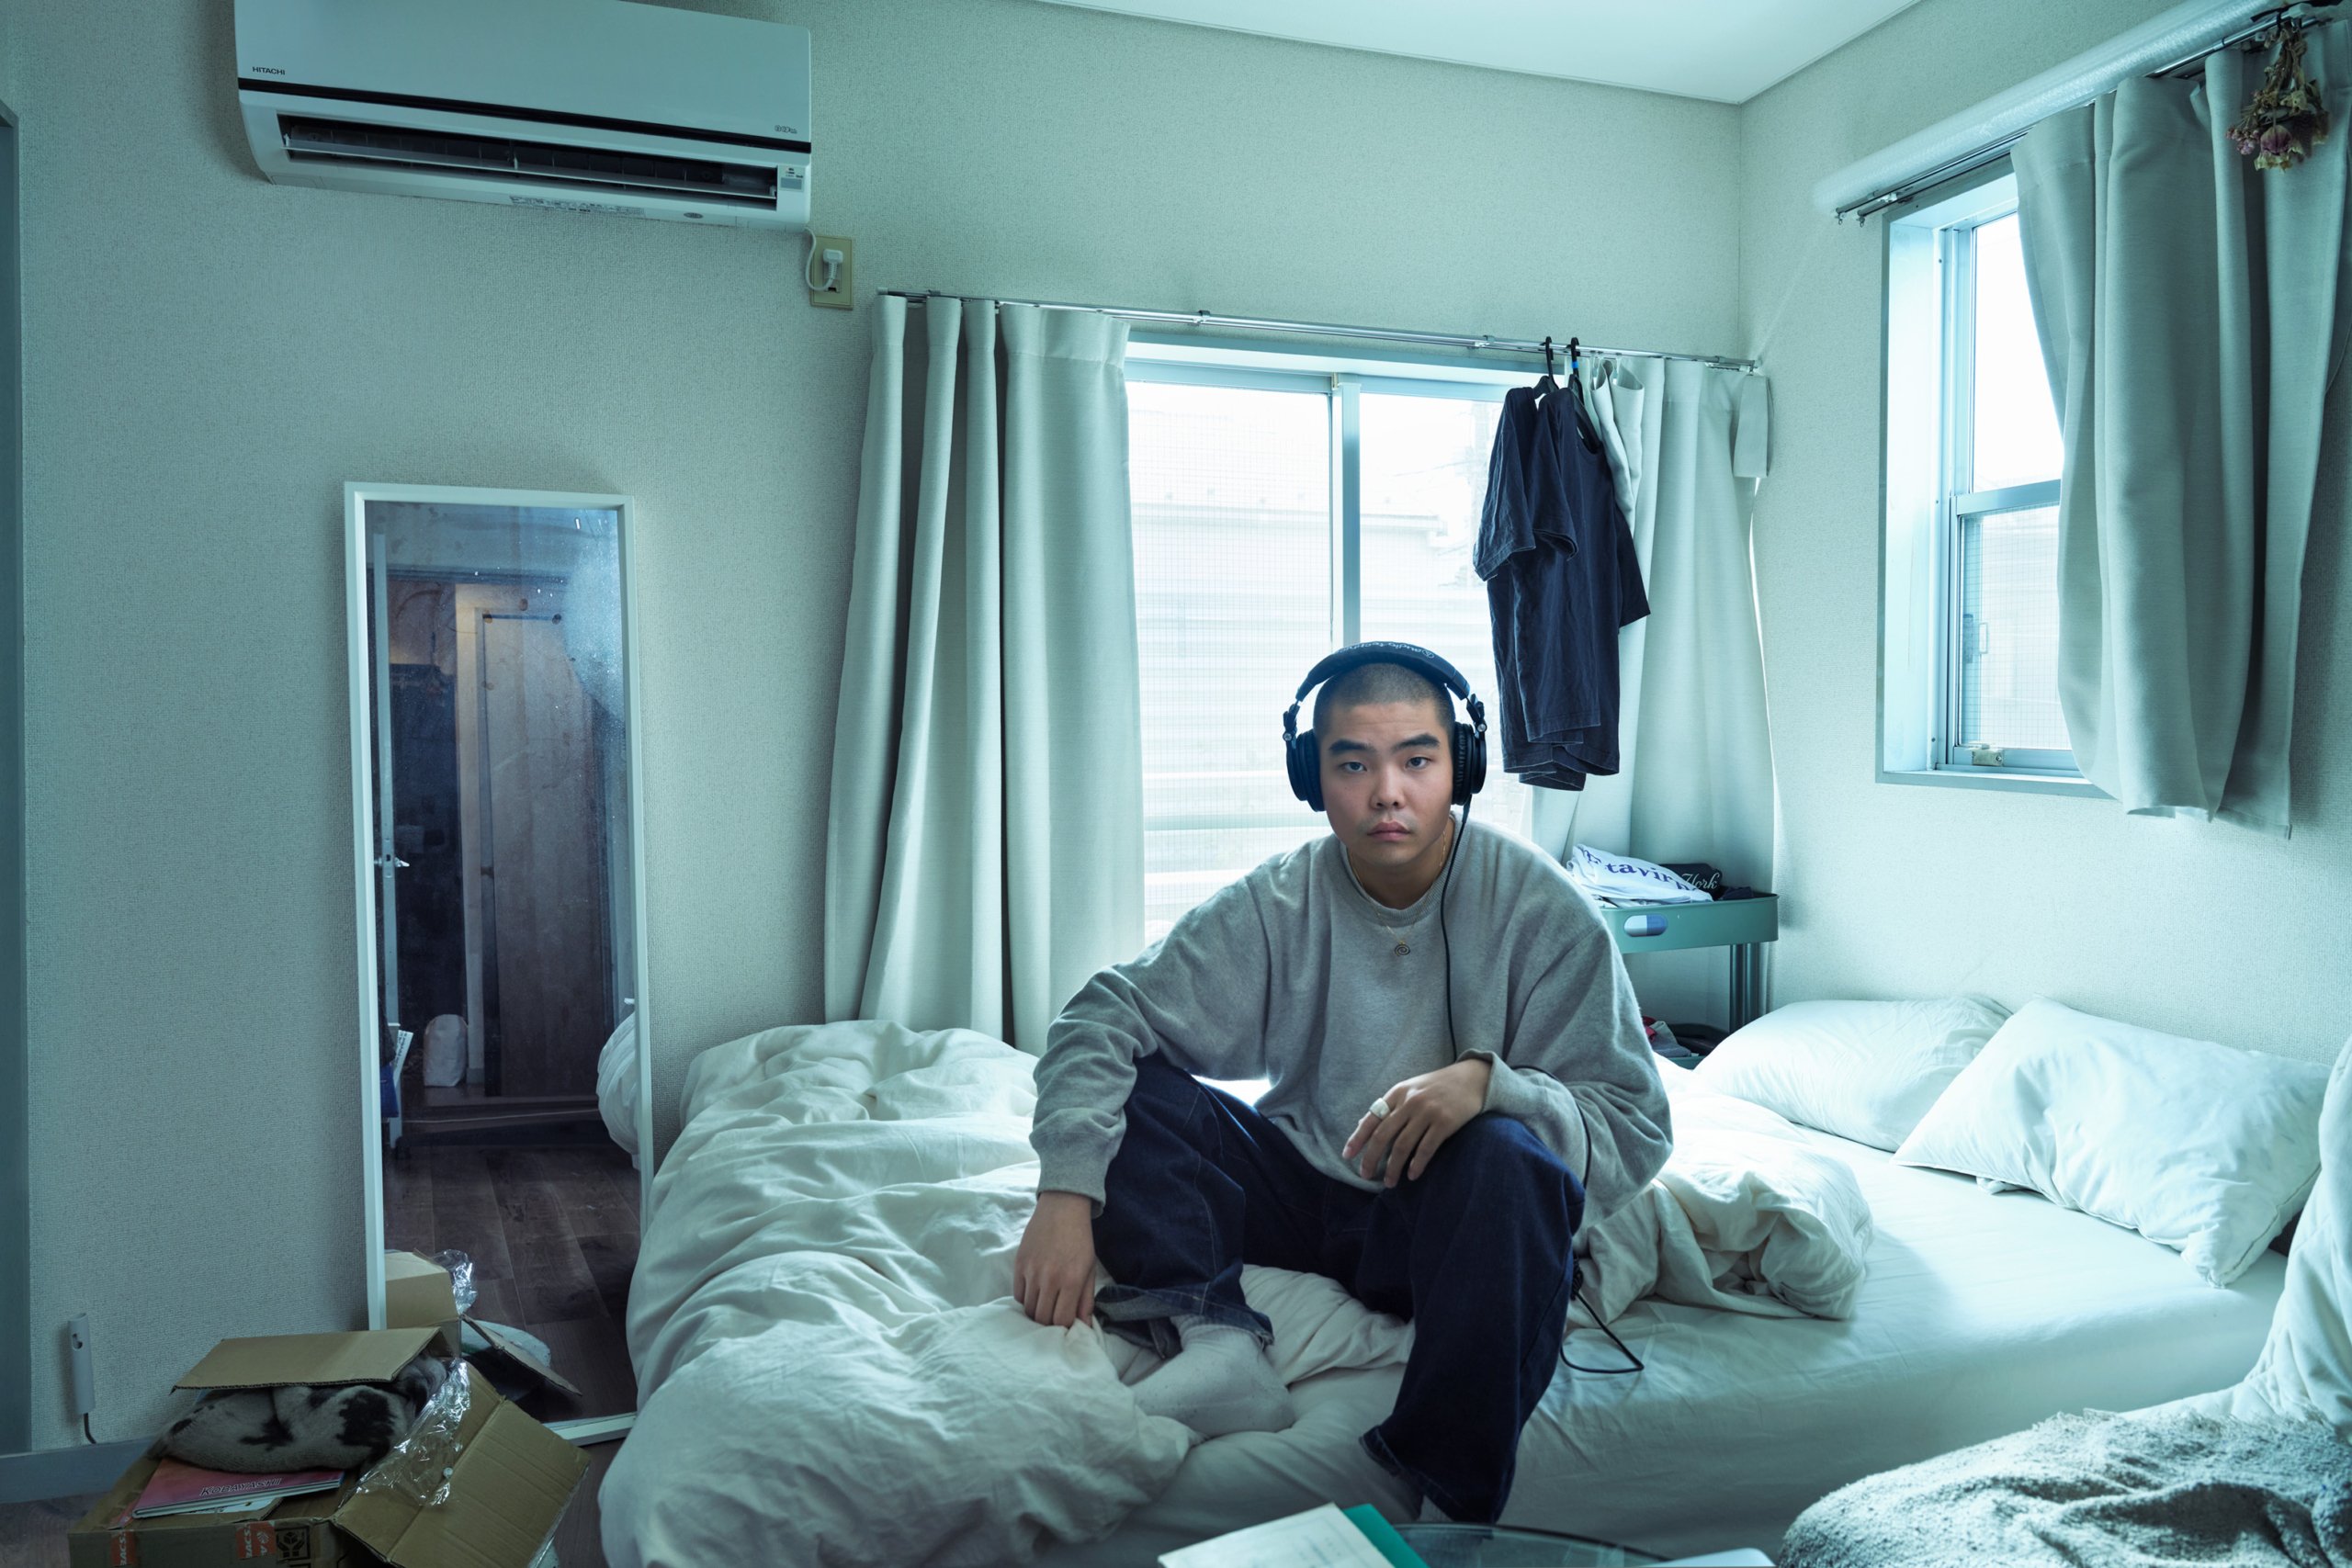 Sota sitting on his bed wearing headphones.